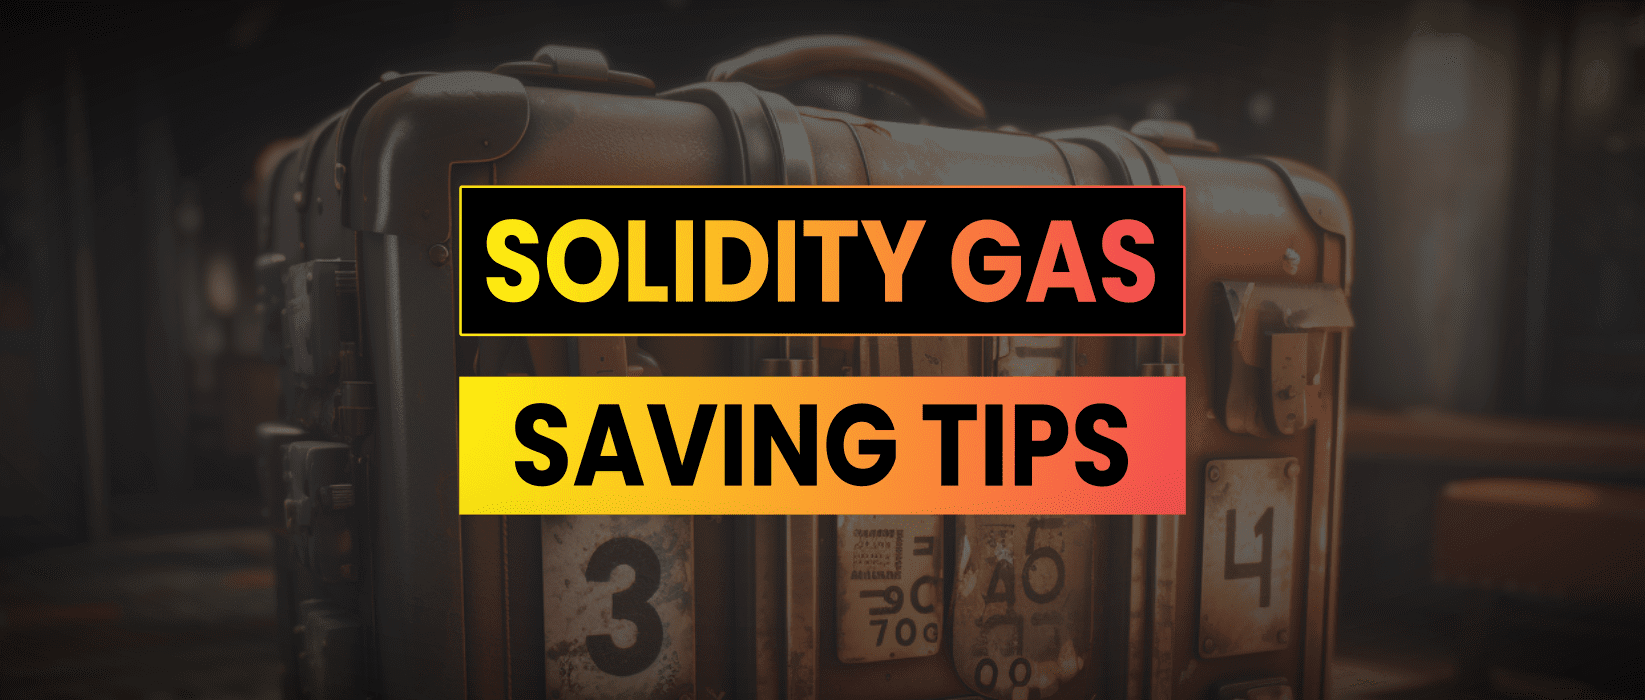 Solidity Gas Saving